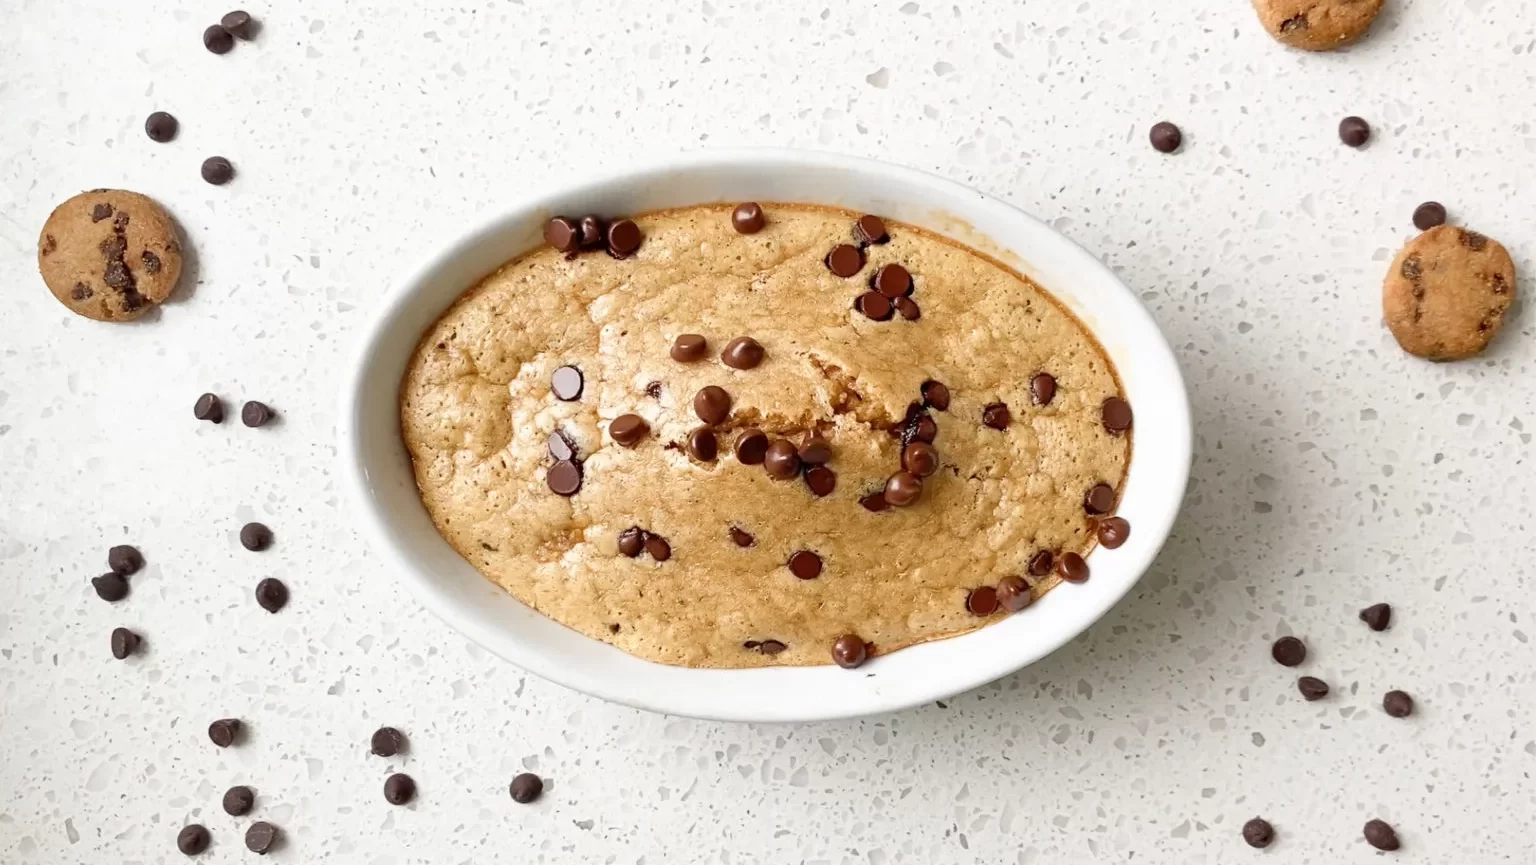 TIKTOK Viral Chocolate Chip Baked Oats Recipe Details